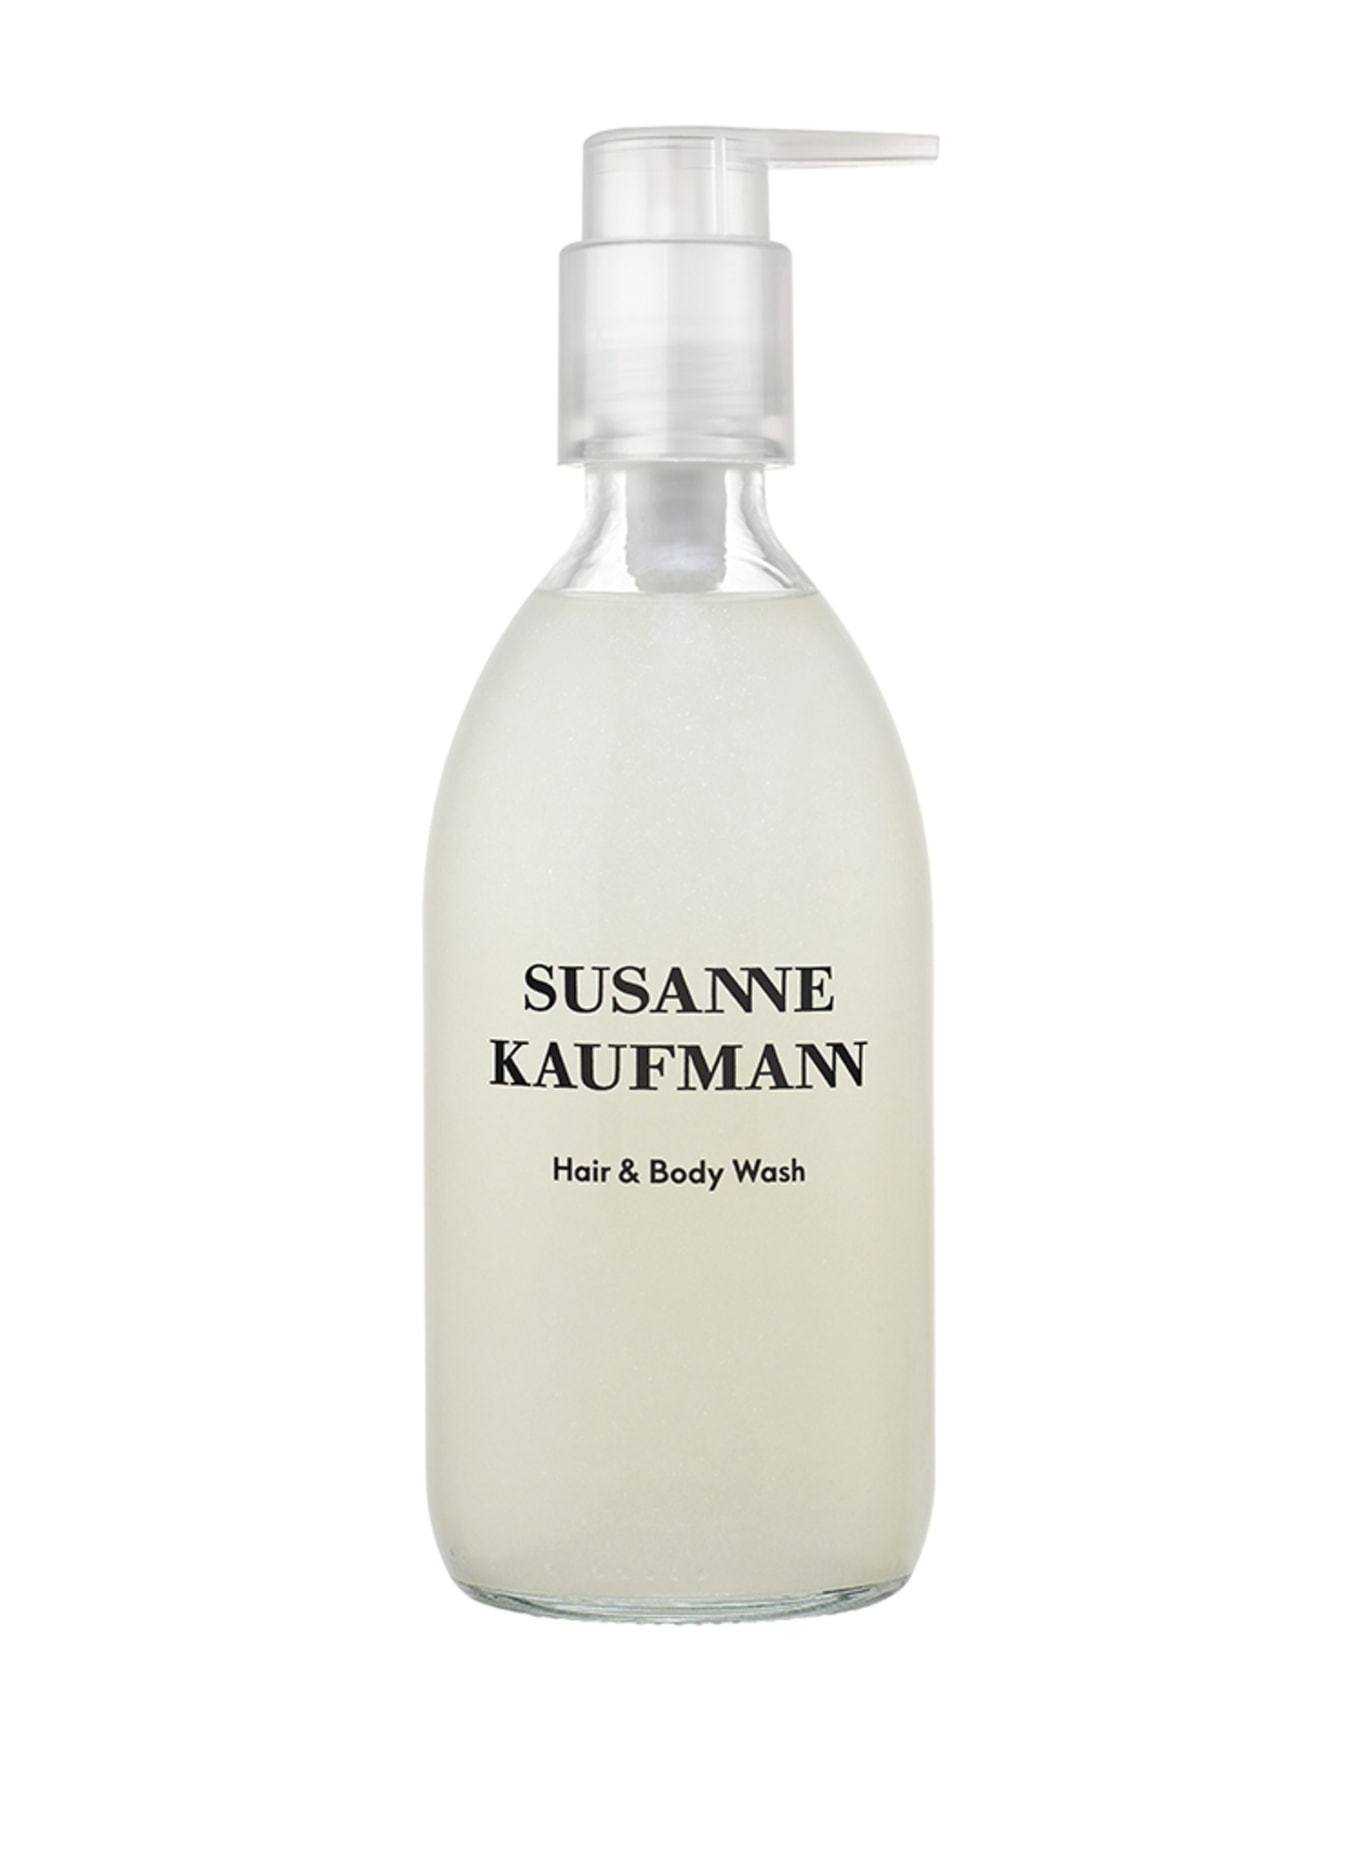 SUSANNE KAUFMANN HAIR & BODY WASH (Bild 1)